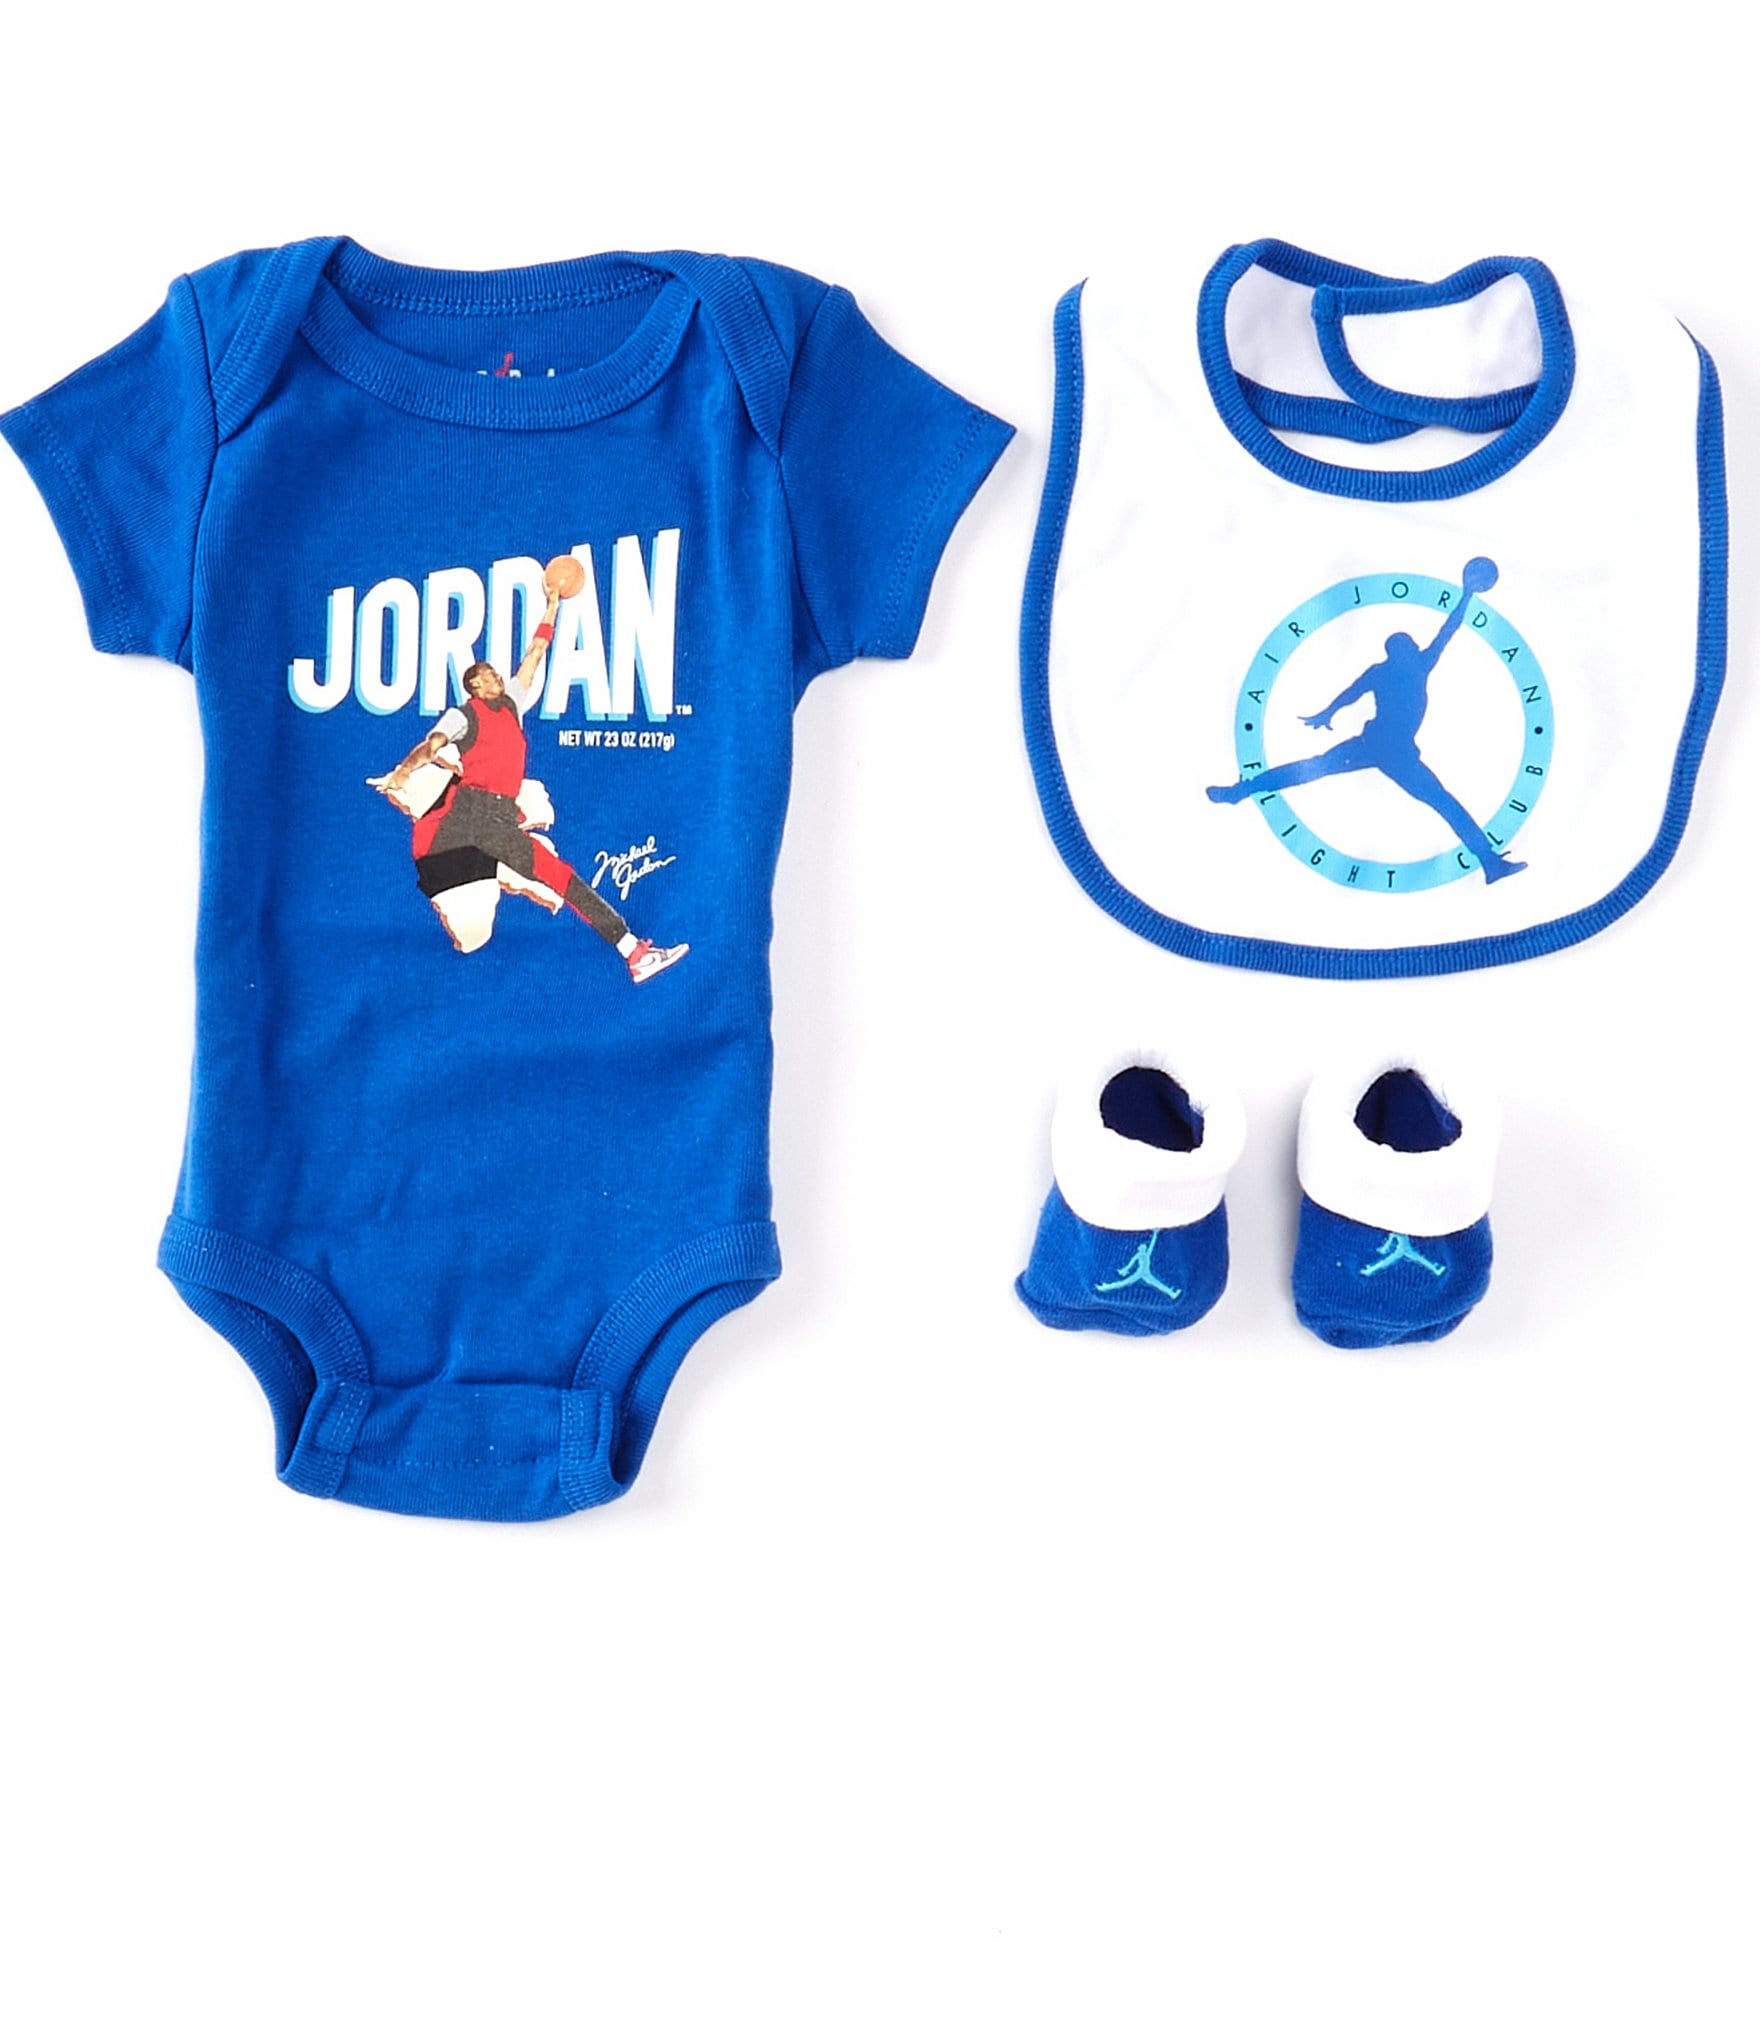 Jordan Baby Boys Clothes 0-24 Months 